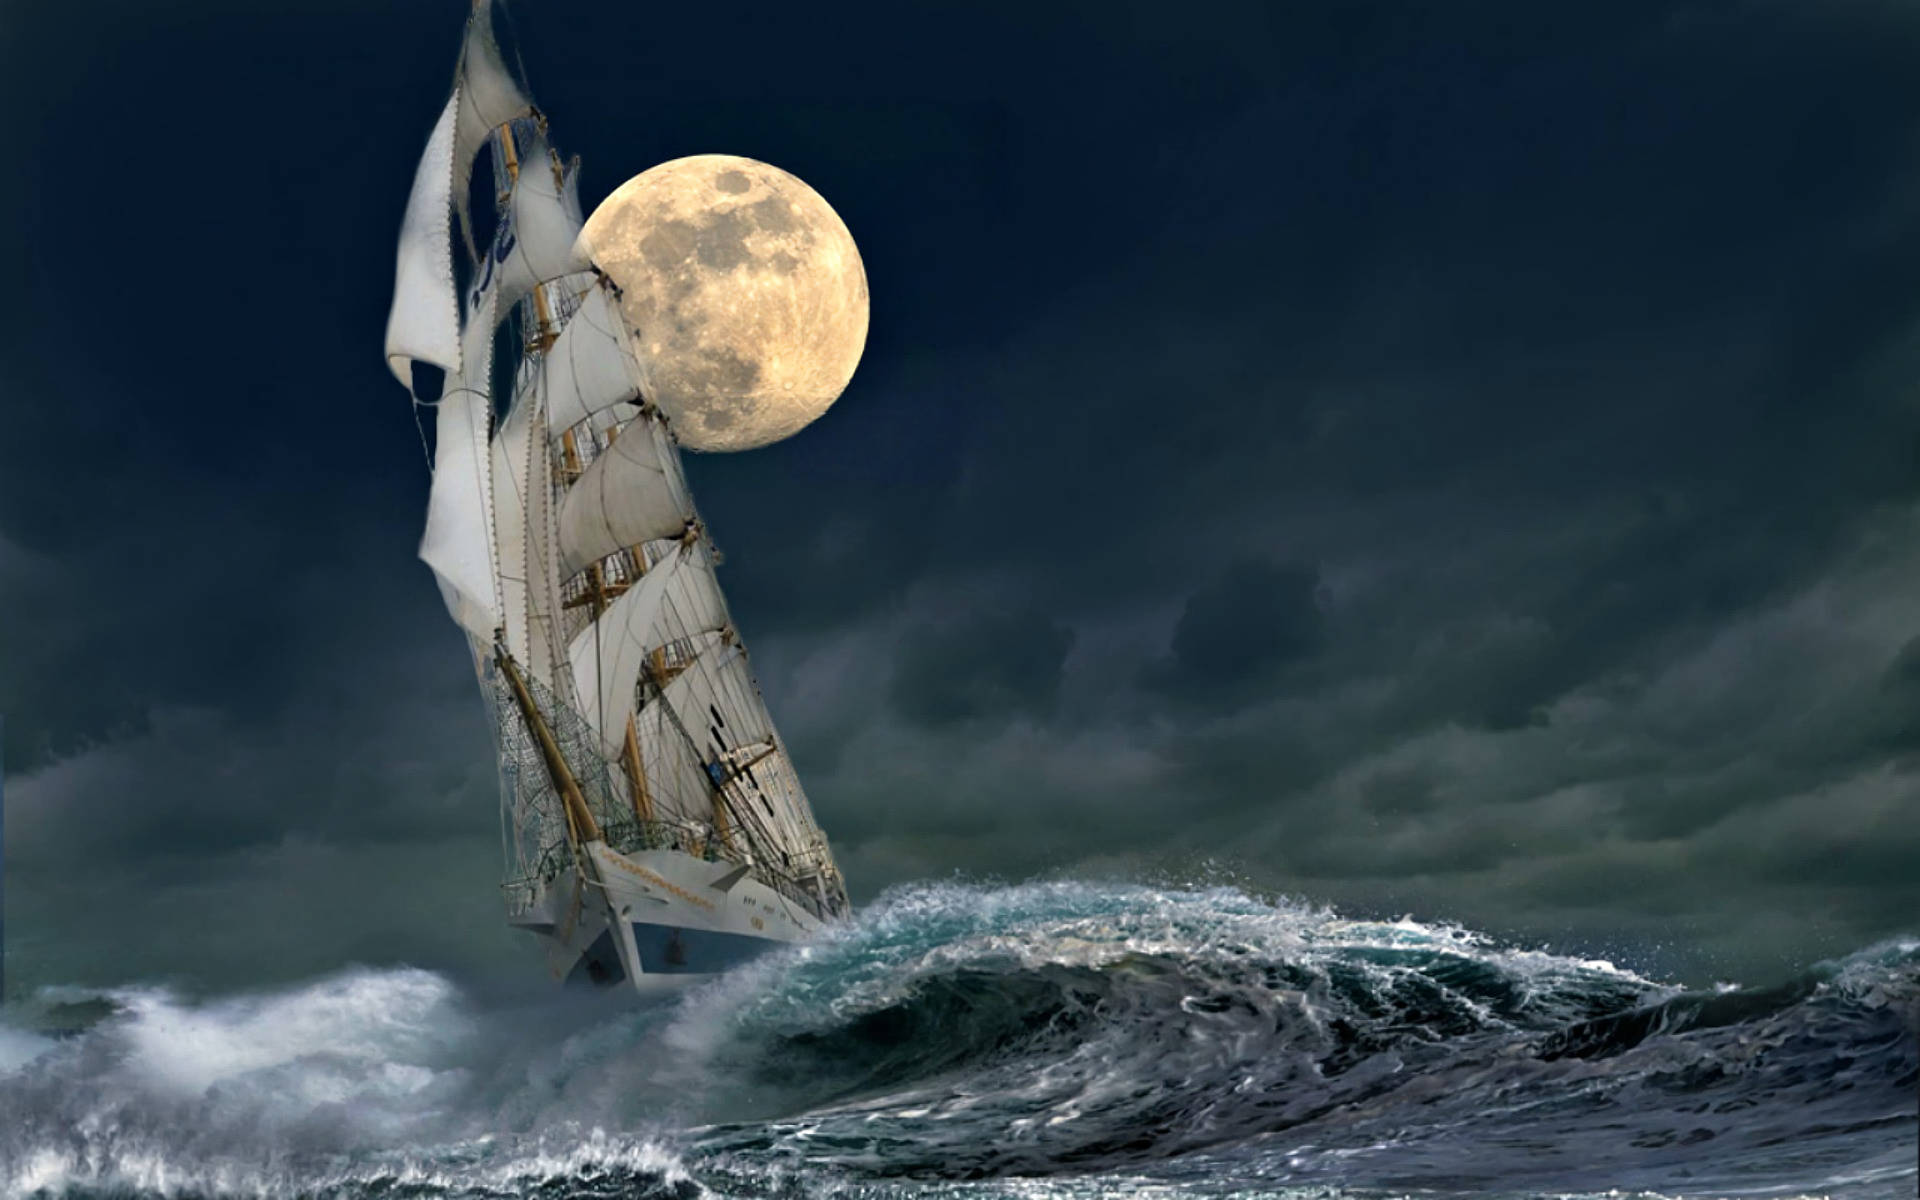 Download Sailing Boat Full Moon Wallpaper